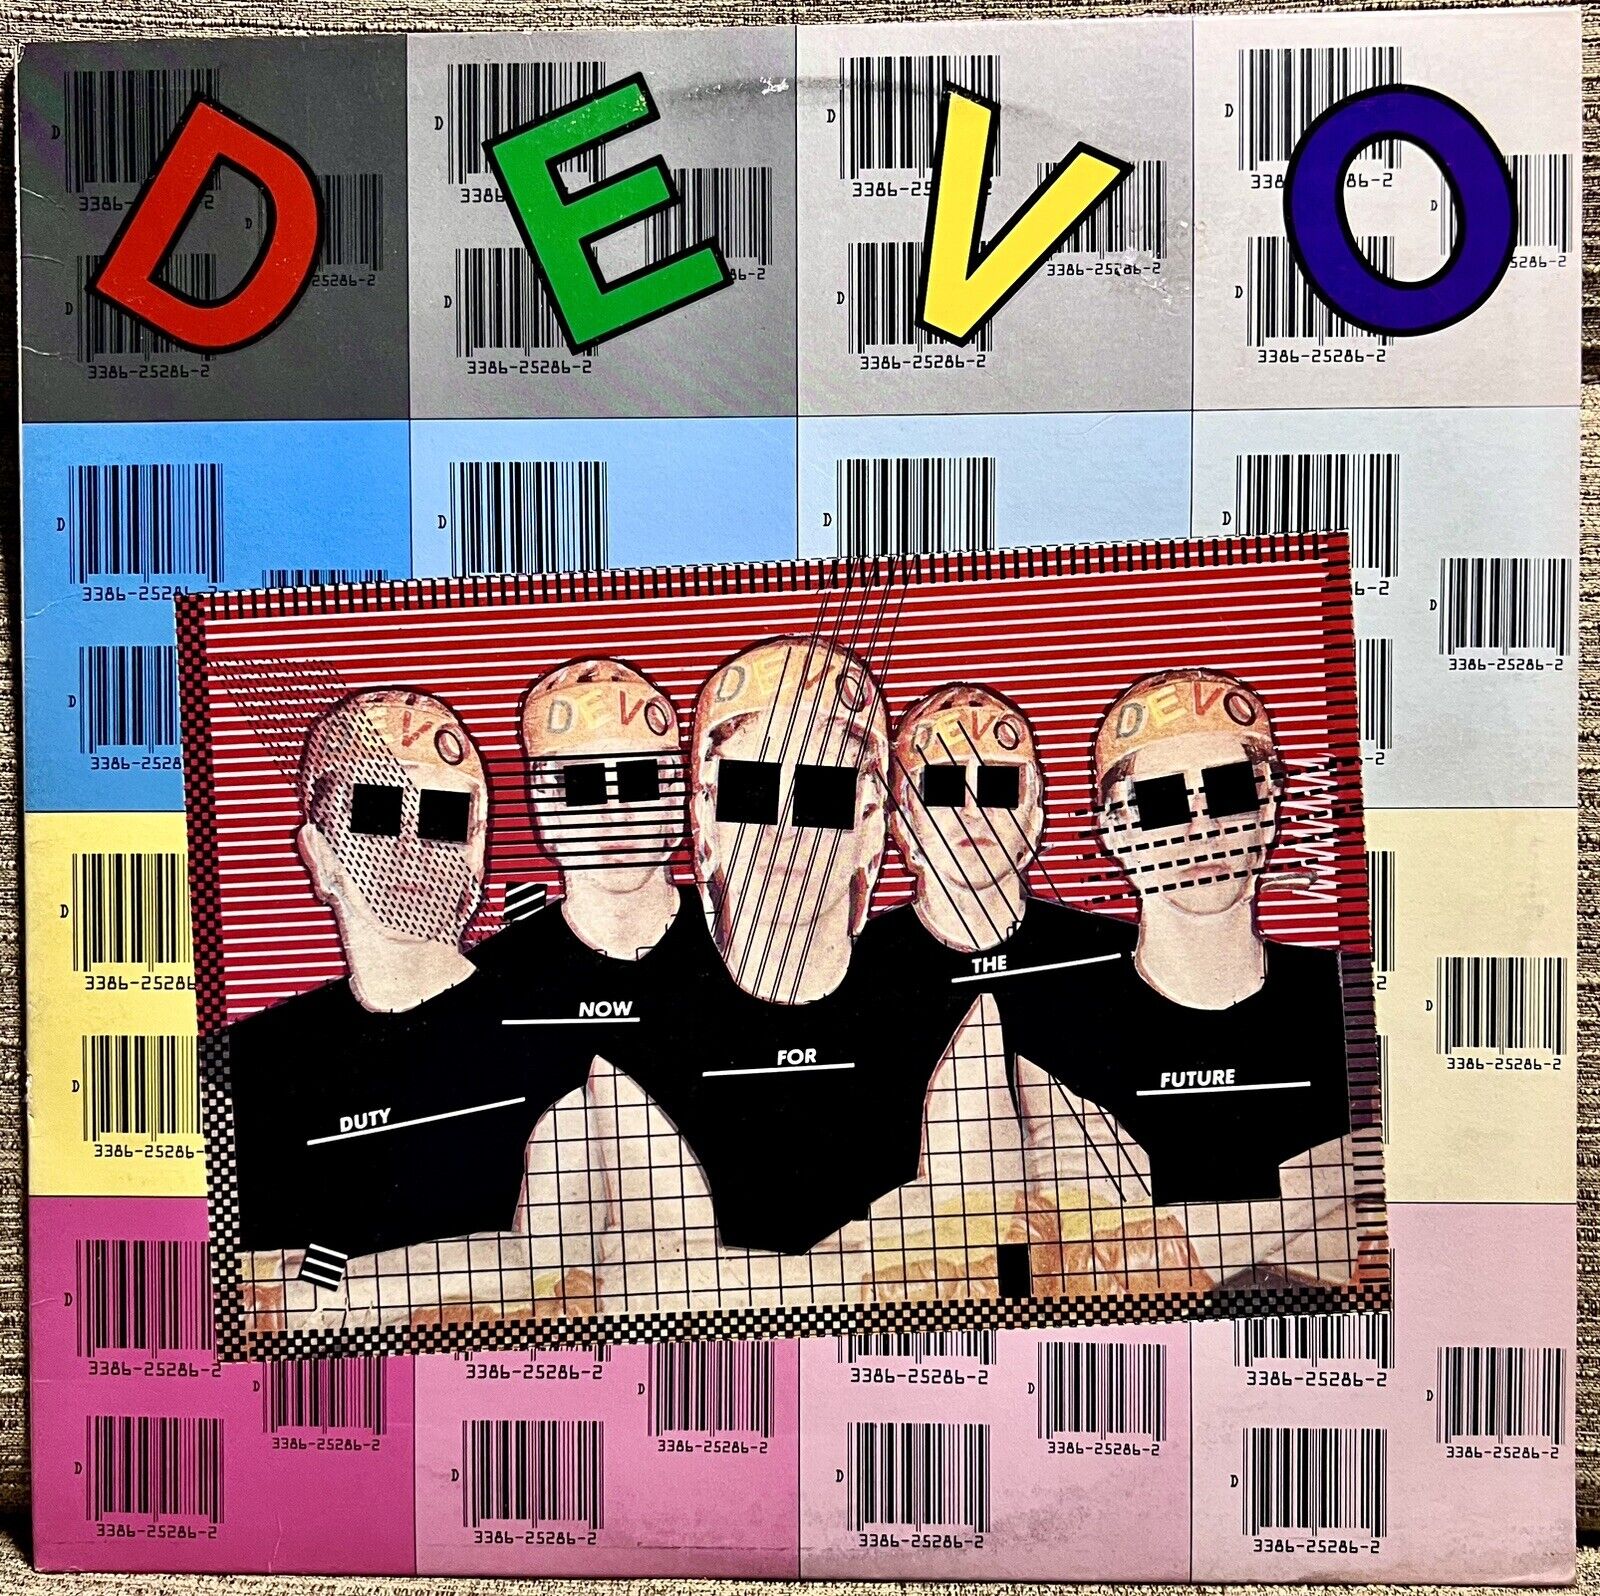 Devo - Duty Now For The Future Vinyl 12” Record 1979 Warner Bros VG+